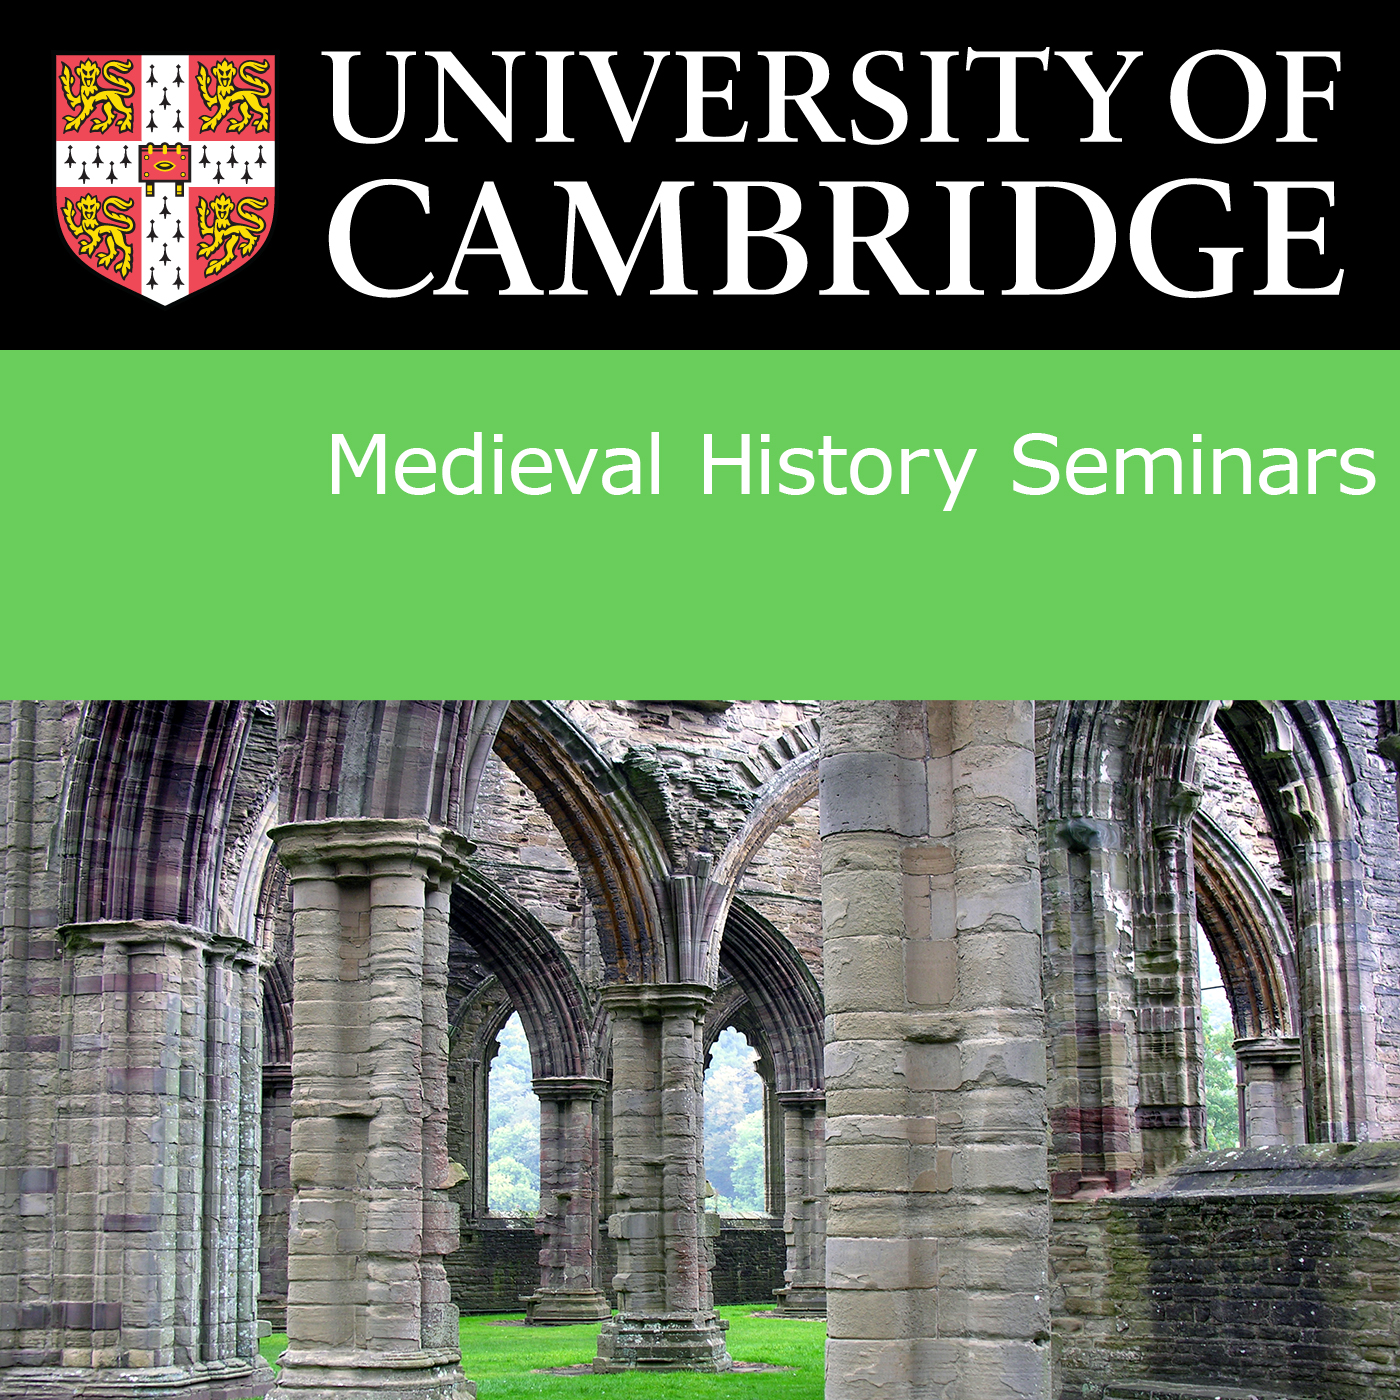 Medieval History Seminars's image